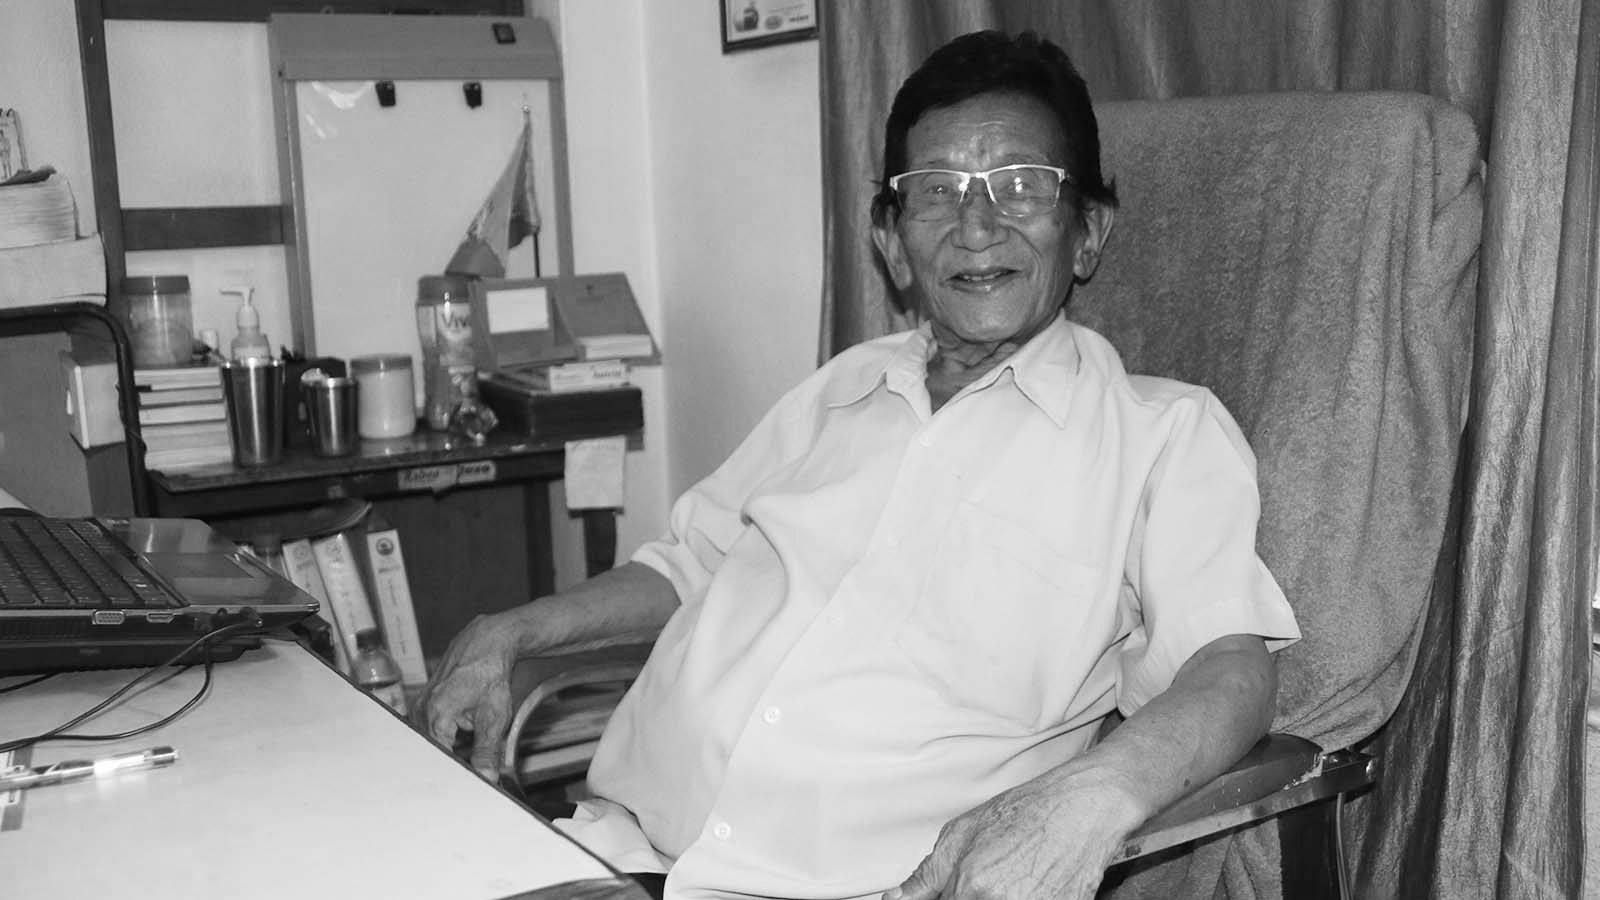 Bhutanese civil society leader Dr Rai passes away